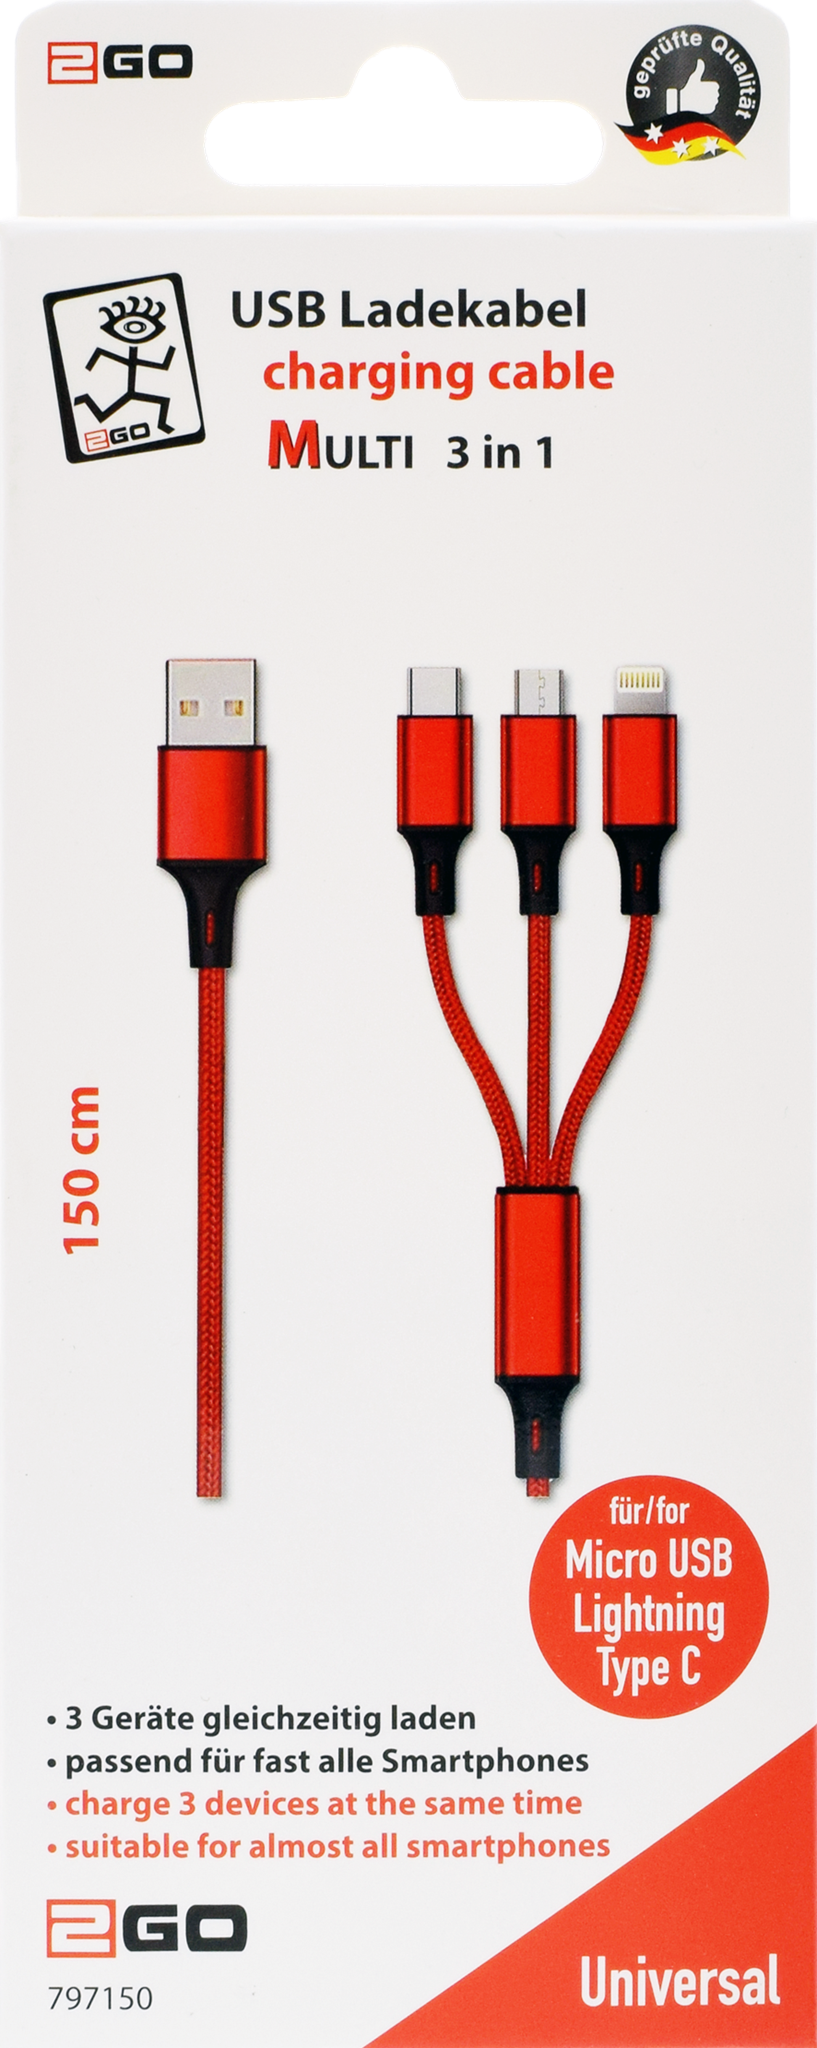 2GO Mobile.net - B2C -. USB Kfz-Ladegerät Micro USB 12V/24V 2,4A